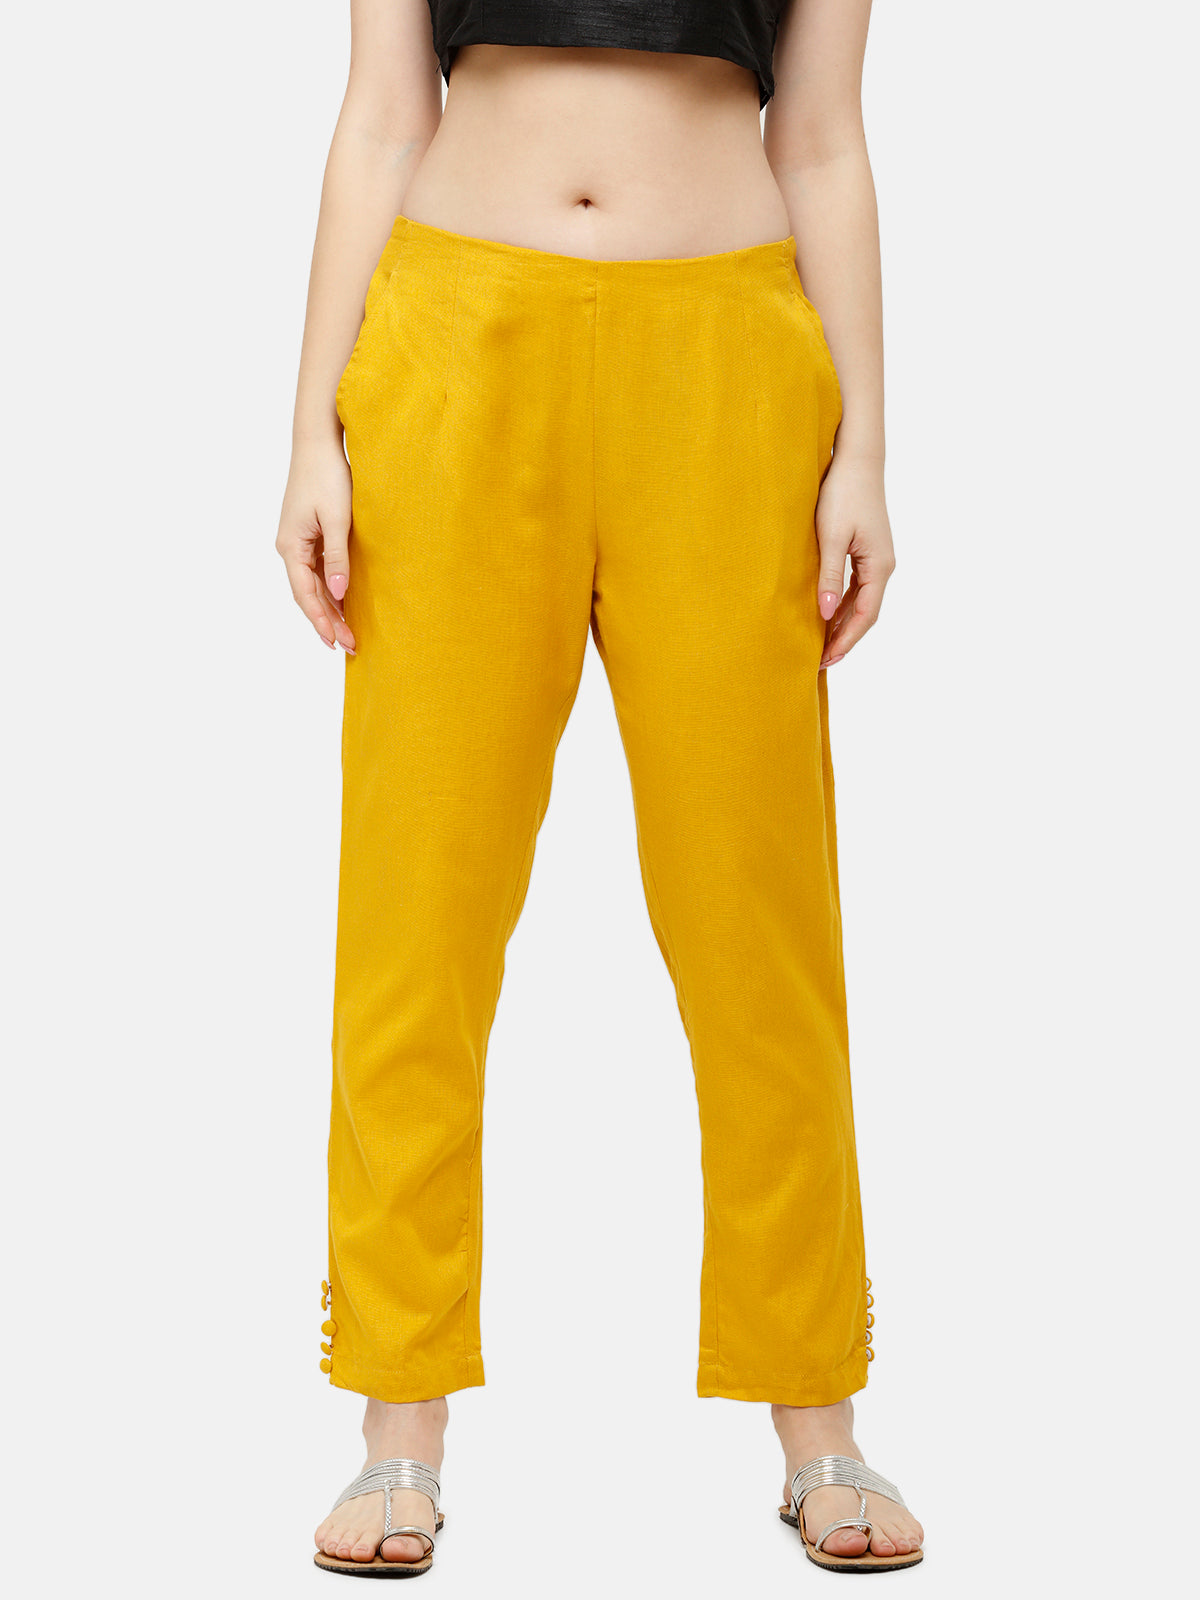 Buy Women Yellow Front Pleat Pants Online at Sassafras